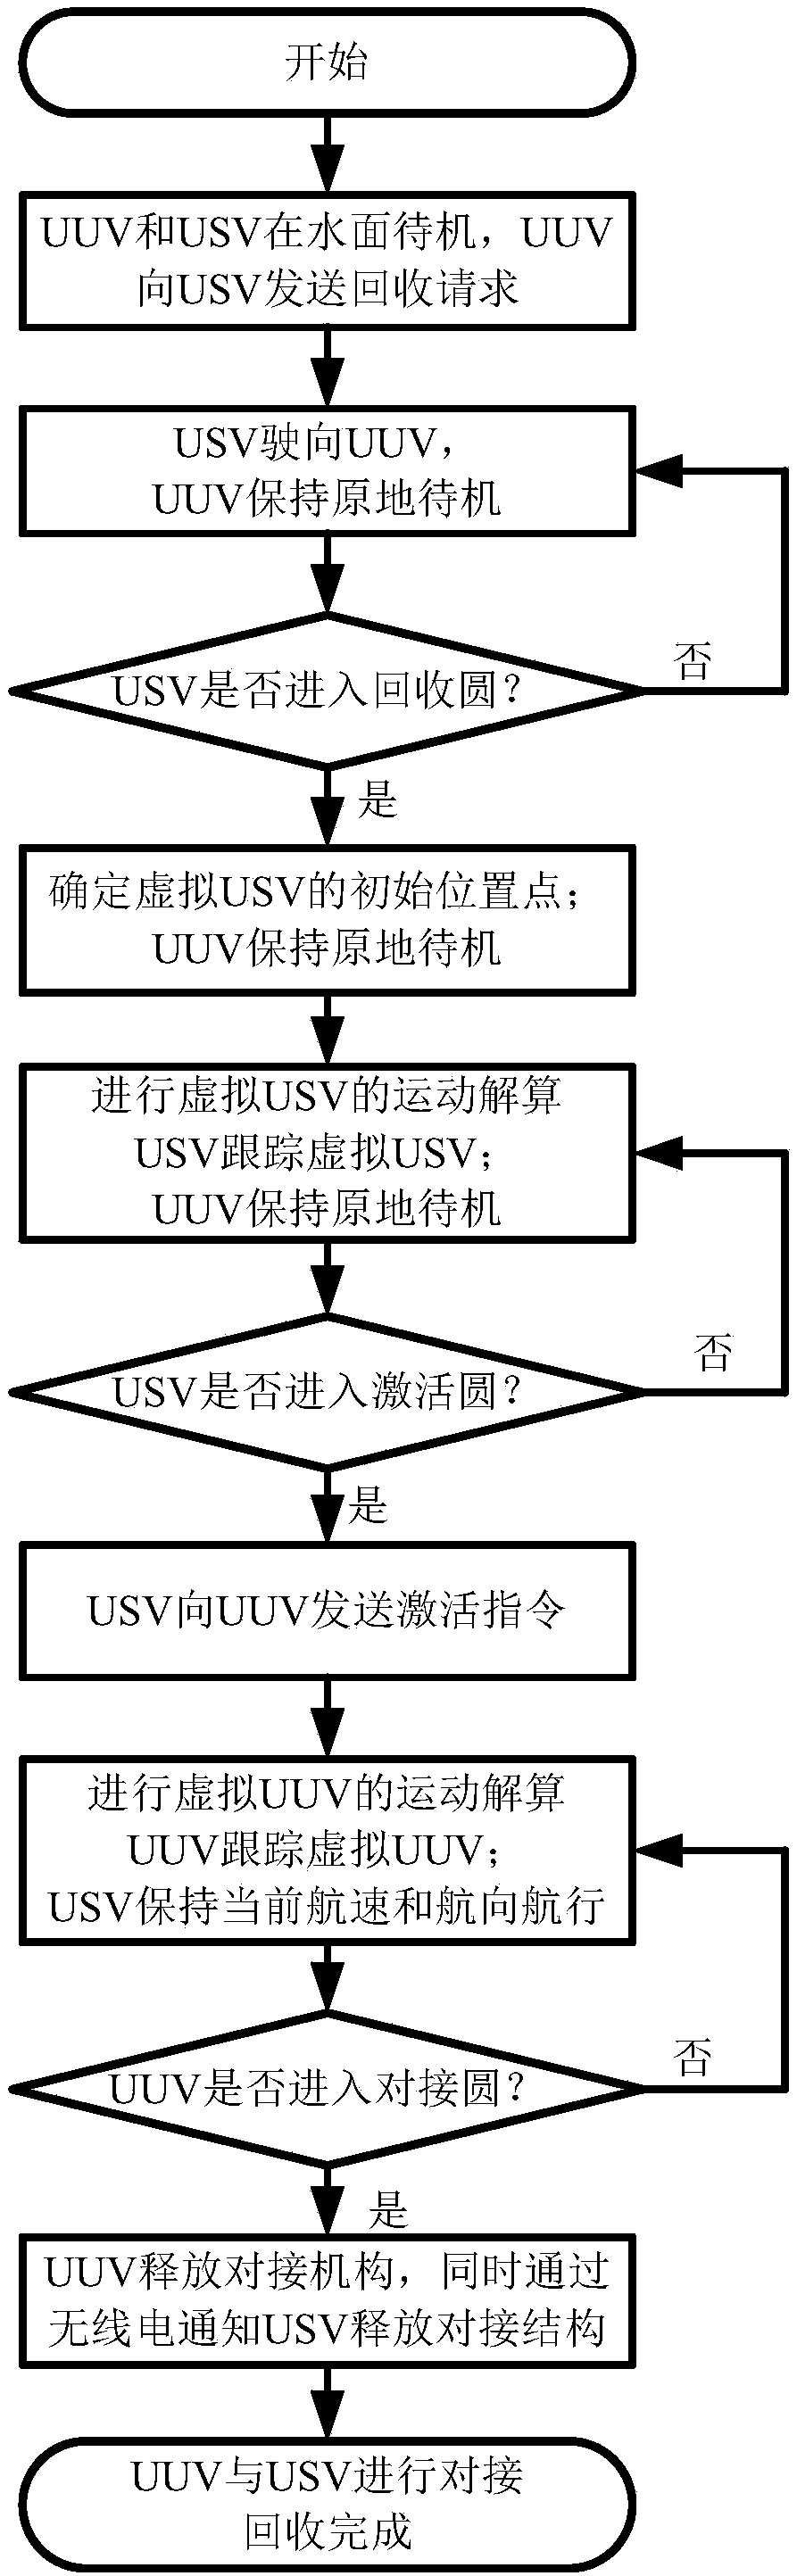 USV water surface dynamic autonomous recovery UUV method